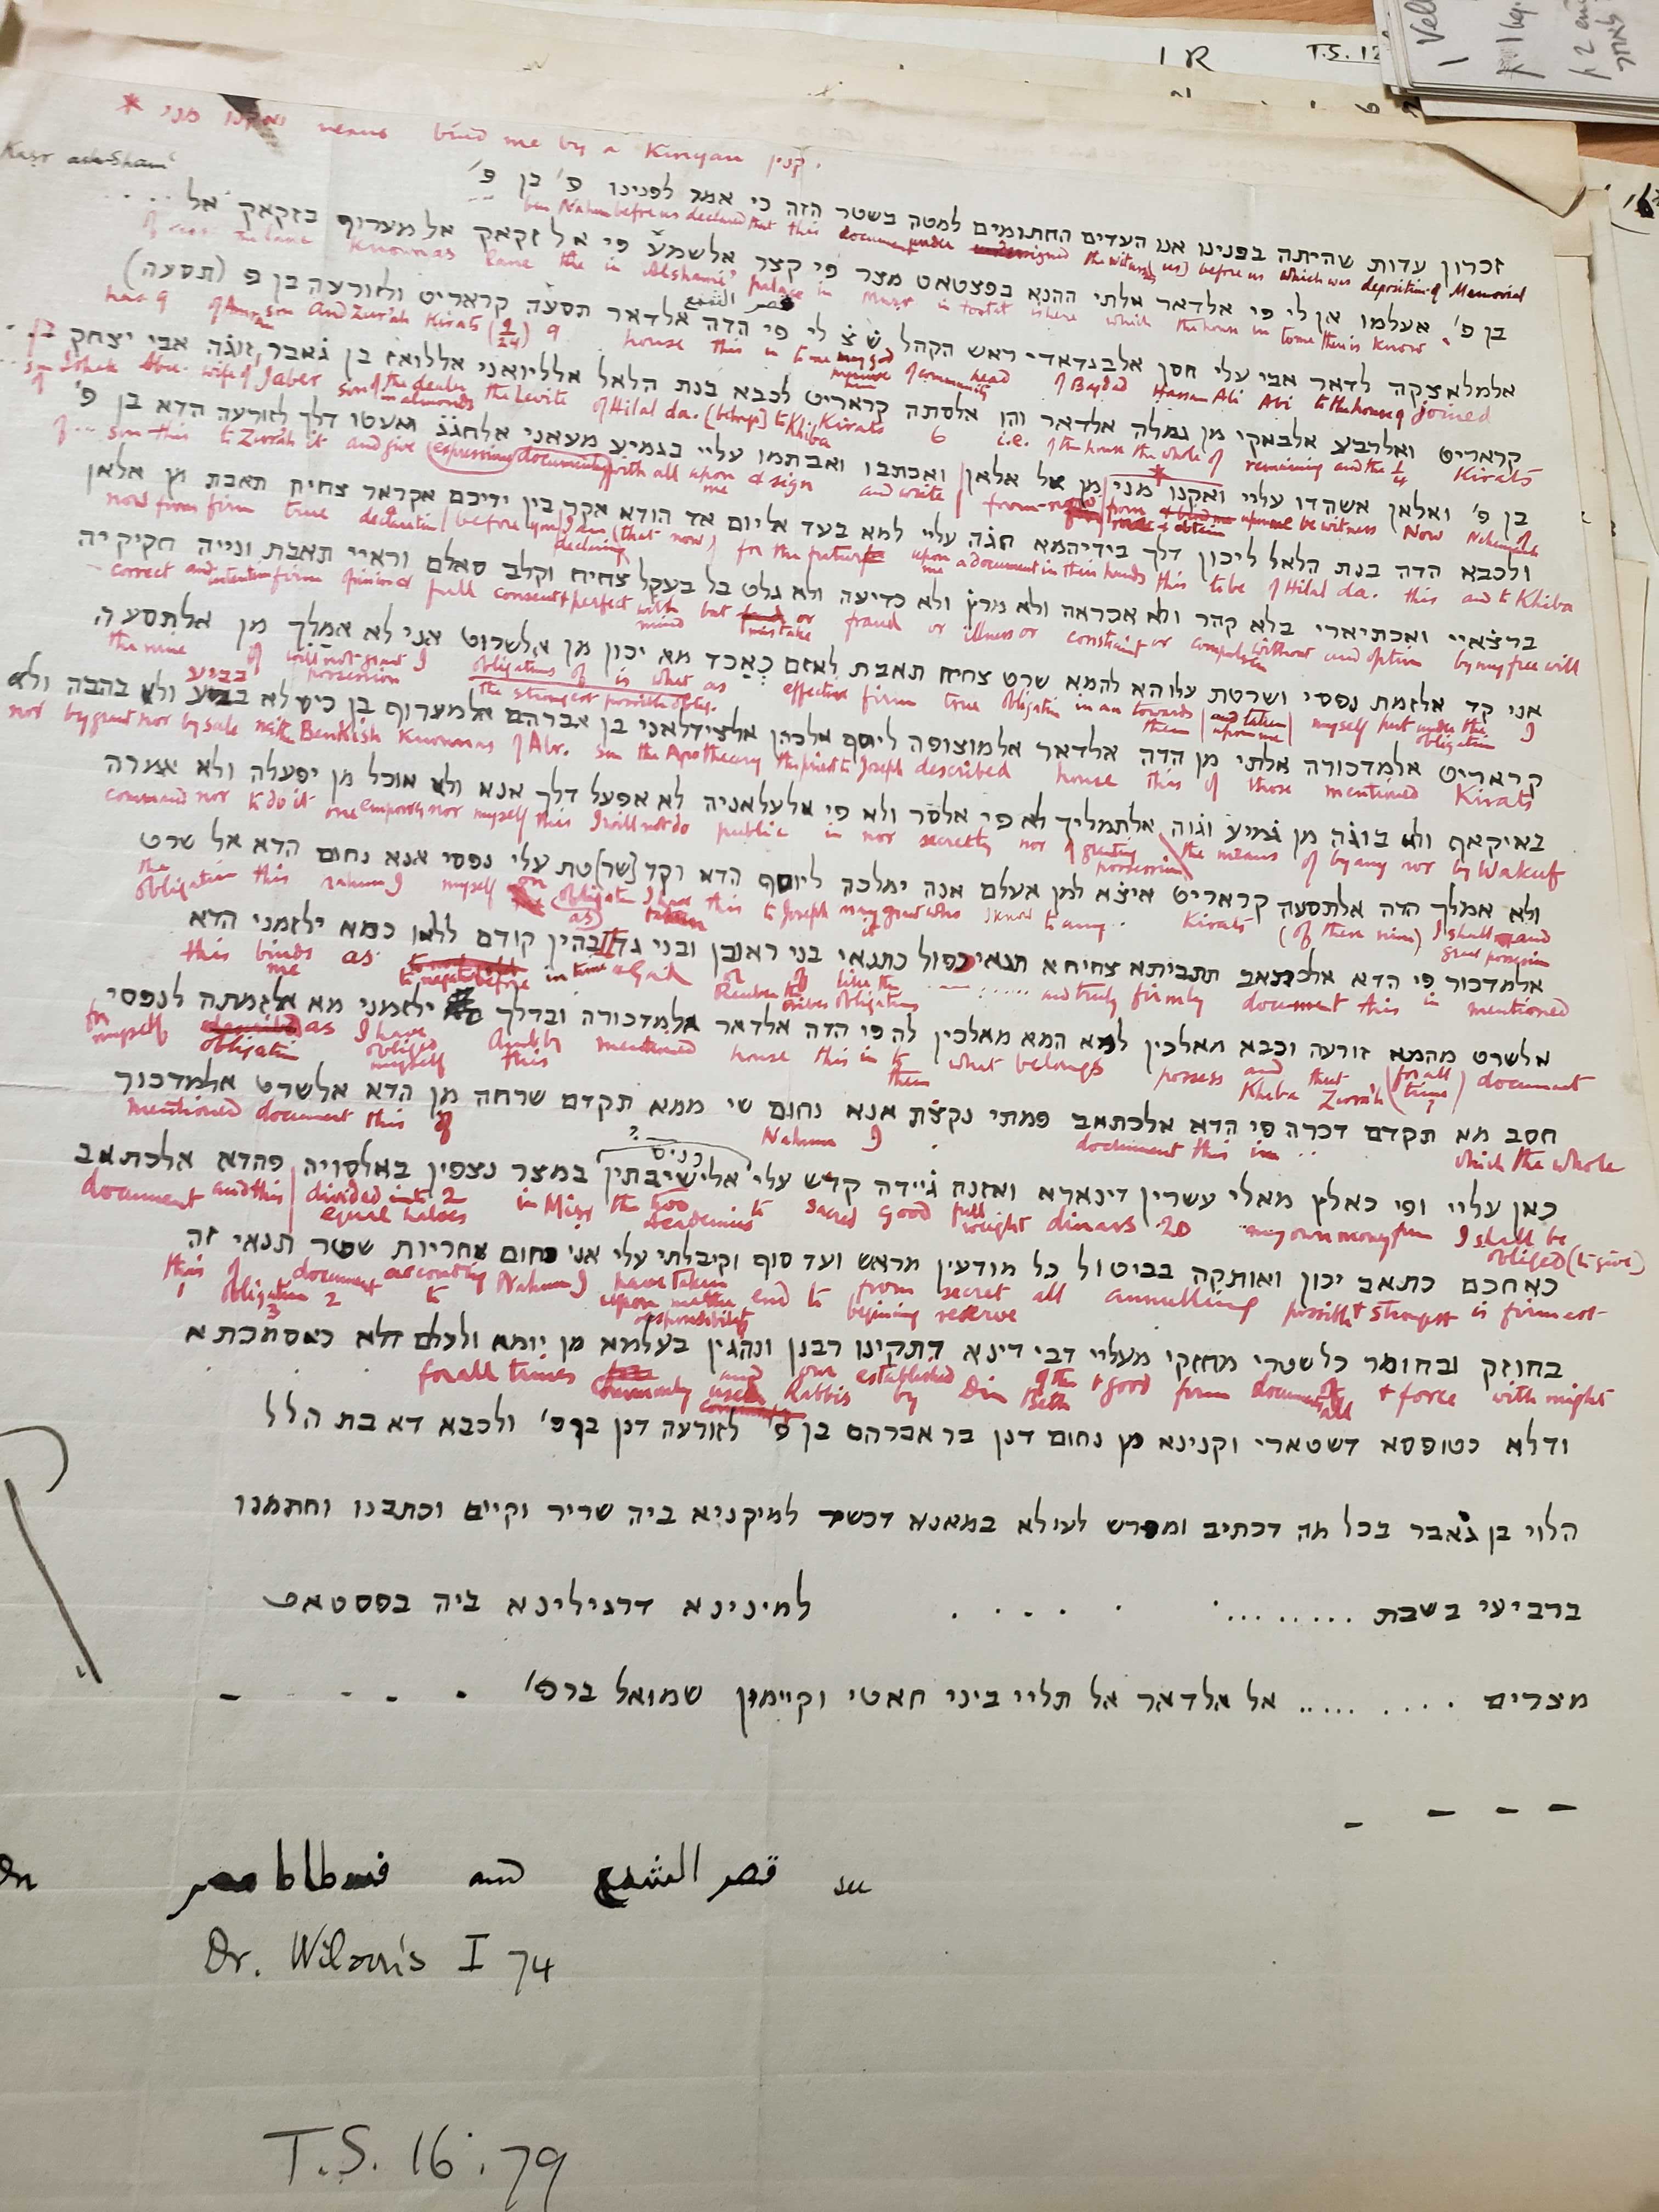 Worman's Judaeo-Arabic translation notes